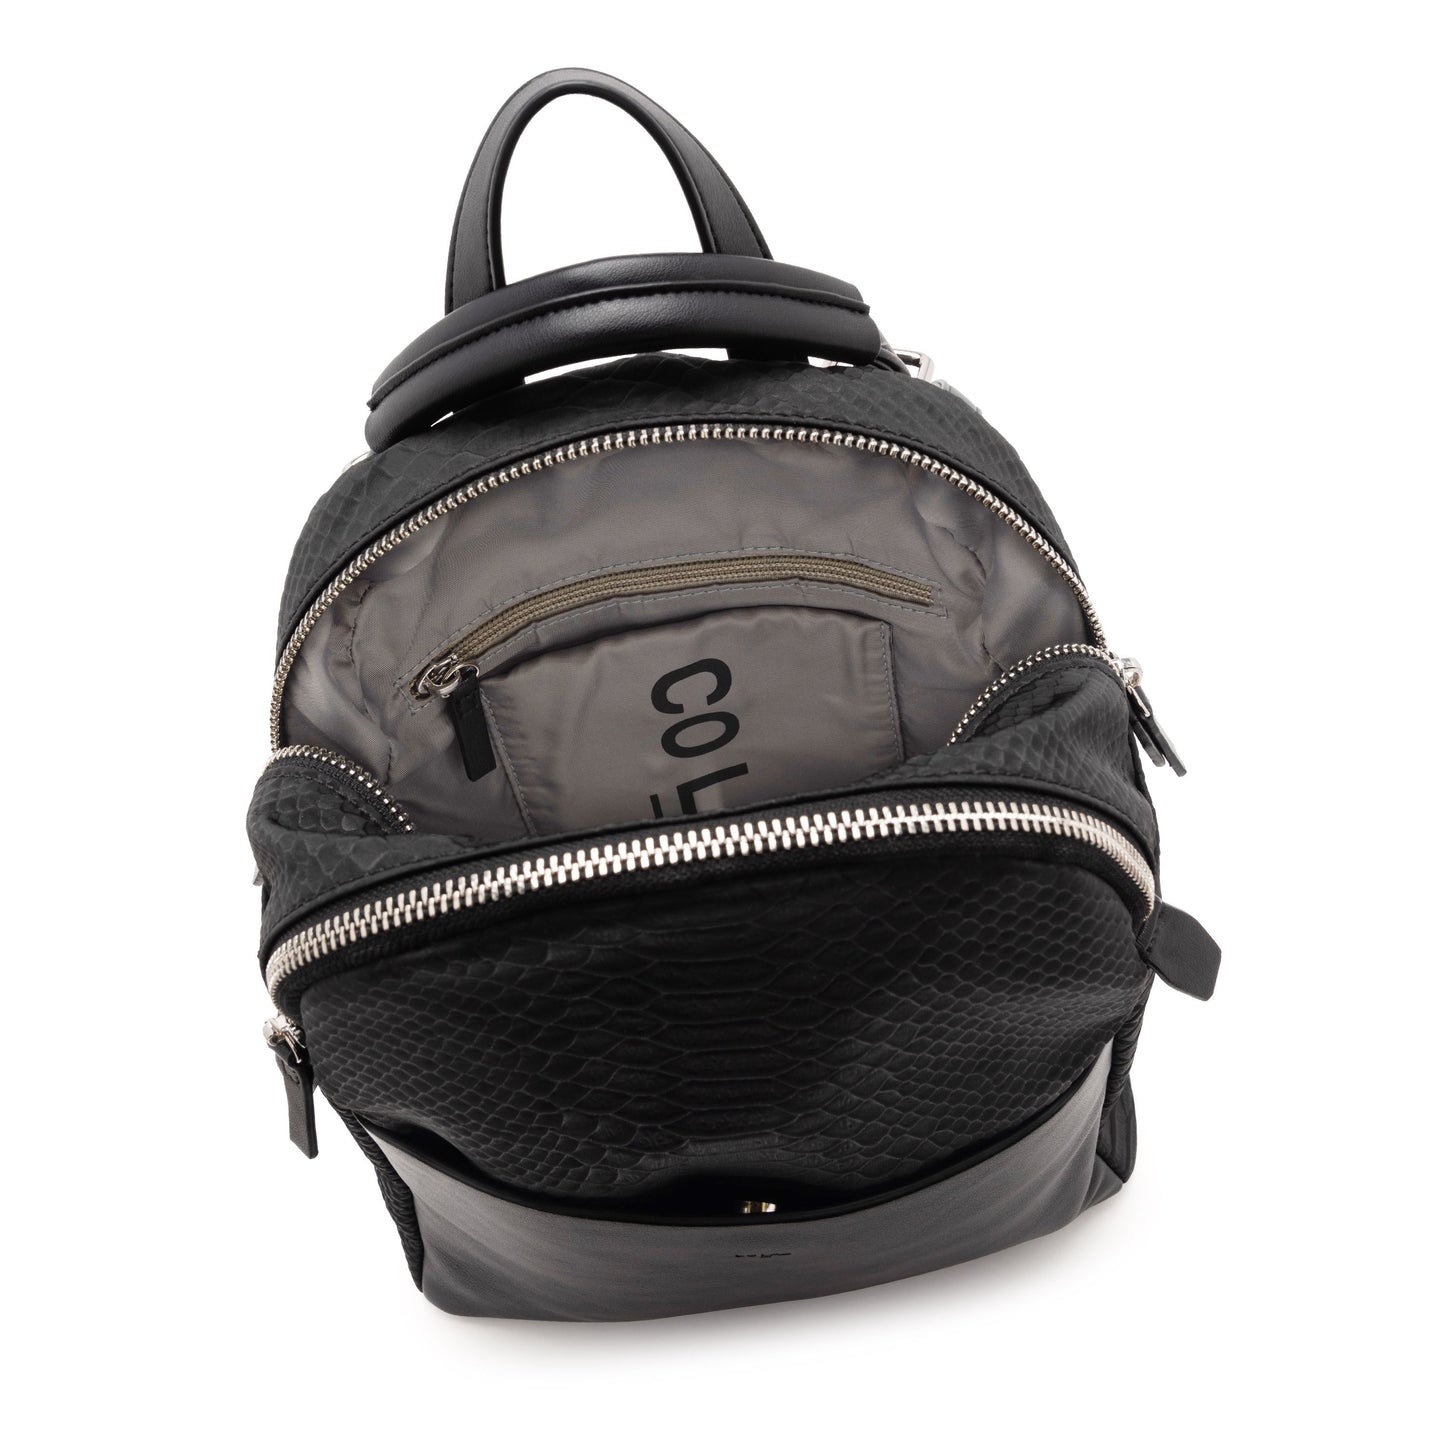 CO 6859-105 Backpack